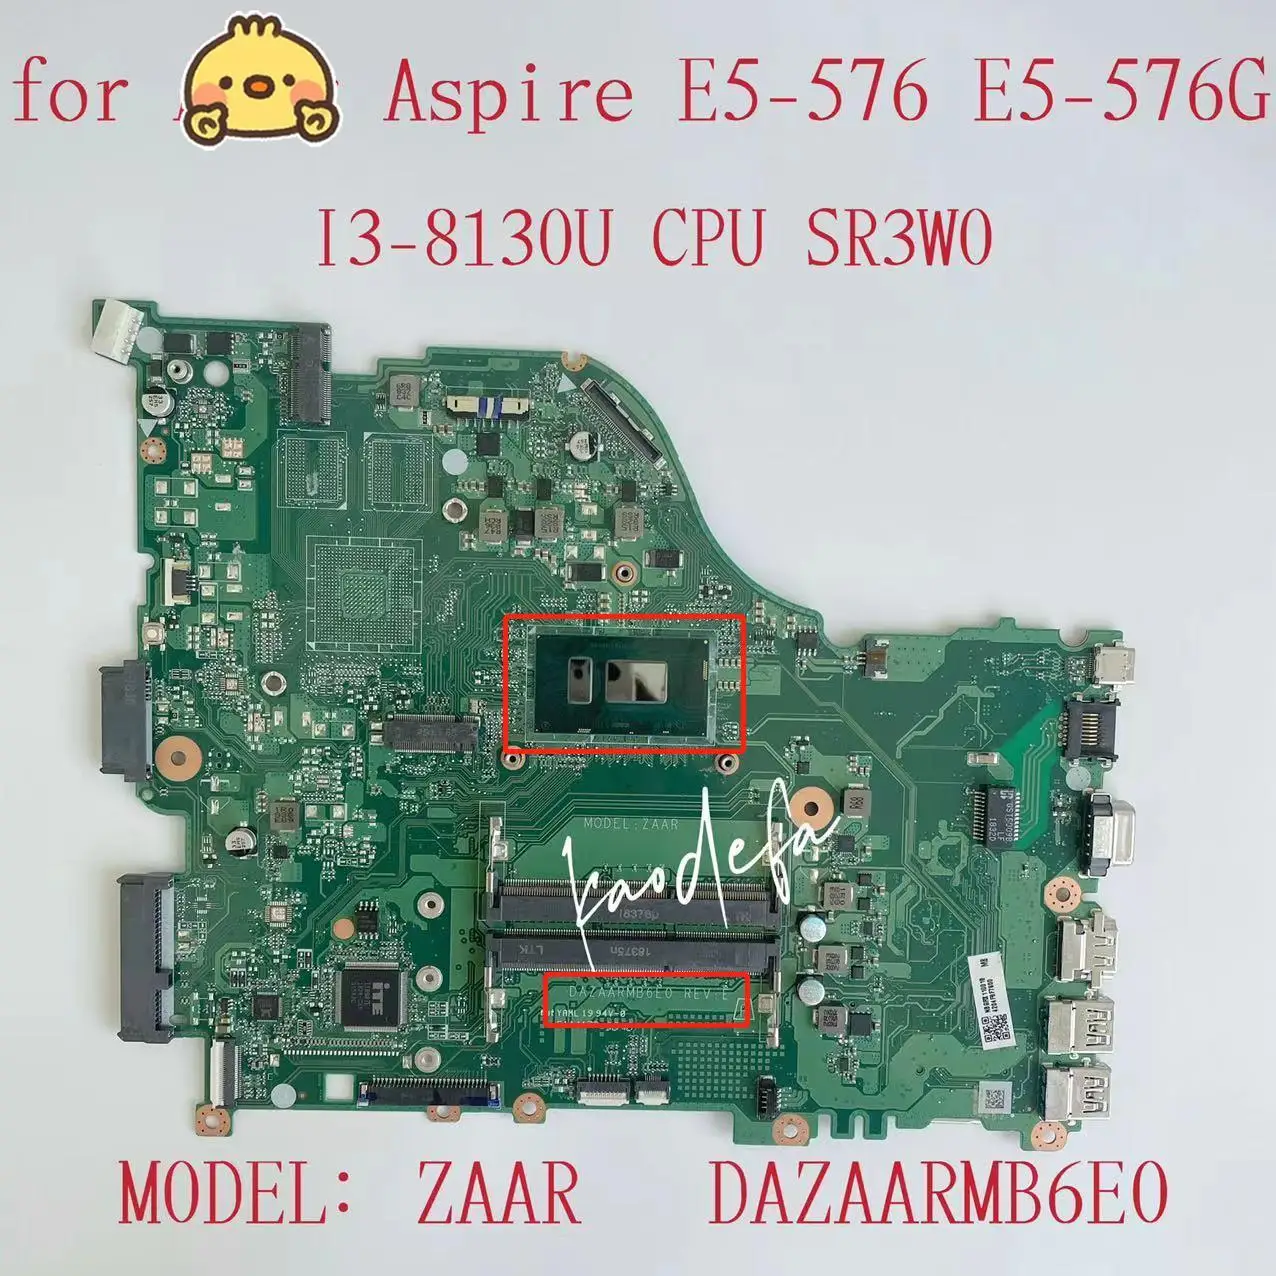 

DAZAARMB6E0 Mainboard For Acer Aspire E5-576 E5-576G Laptop Motherboard With I3-8130U CPU SR3W0 NBGRX11001 100% Fully Test OK